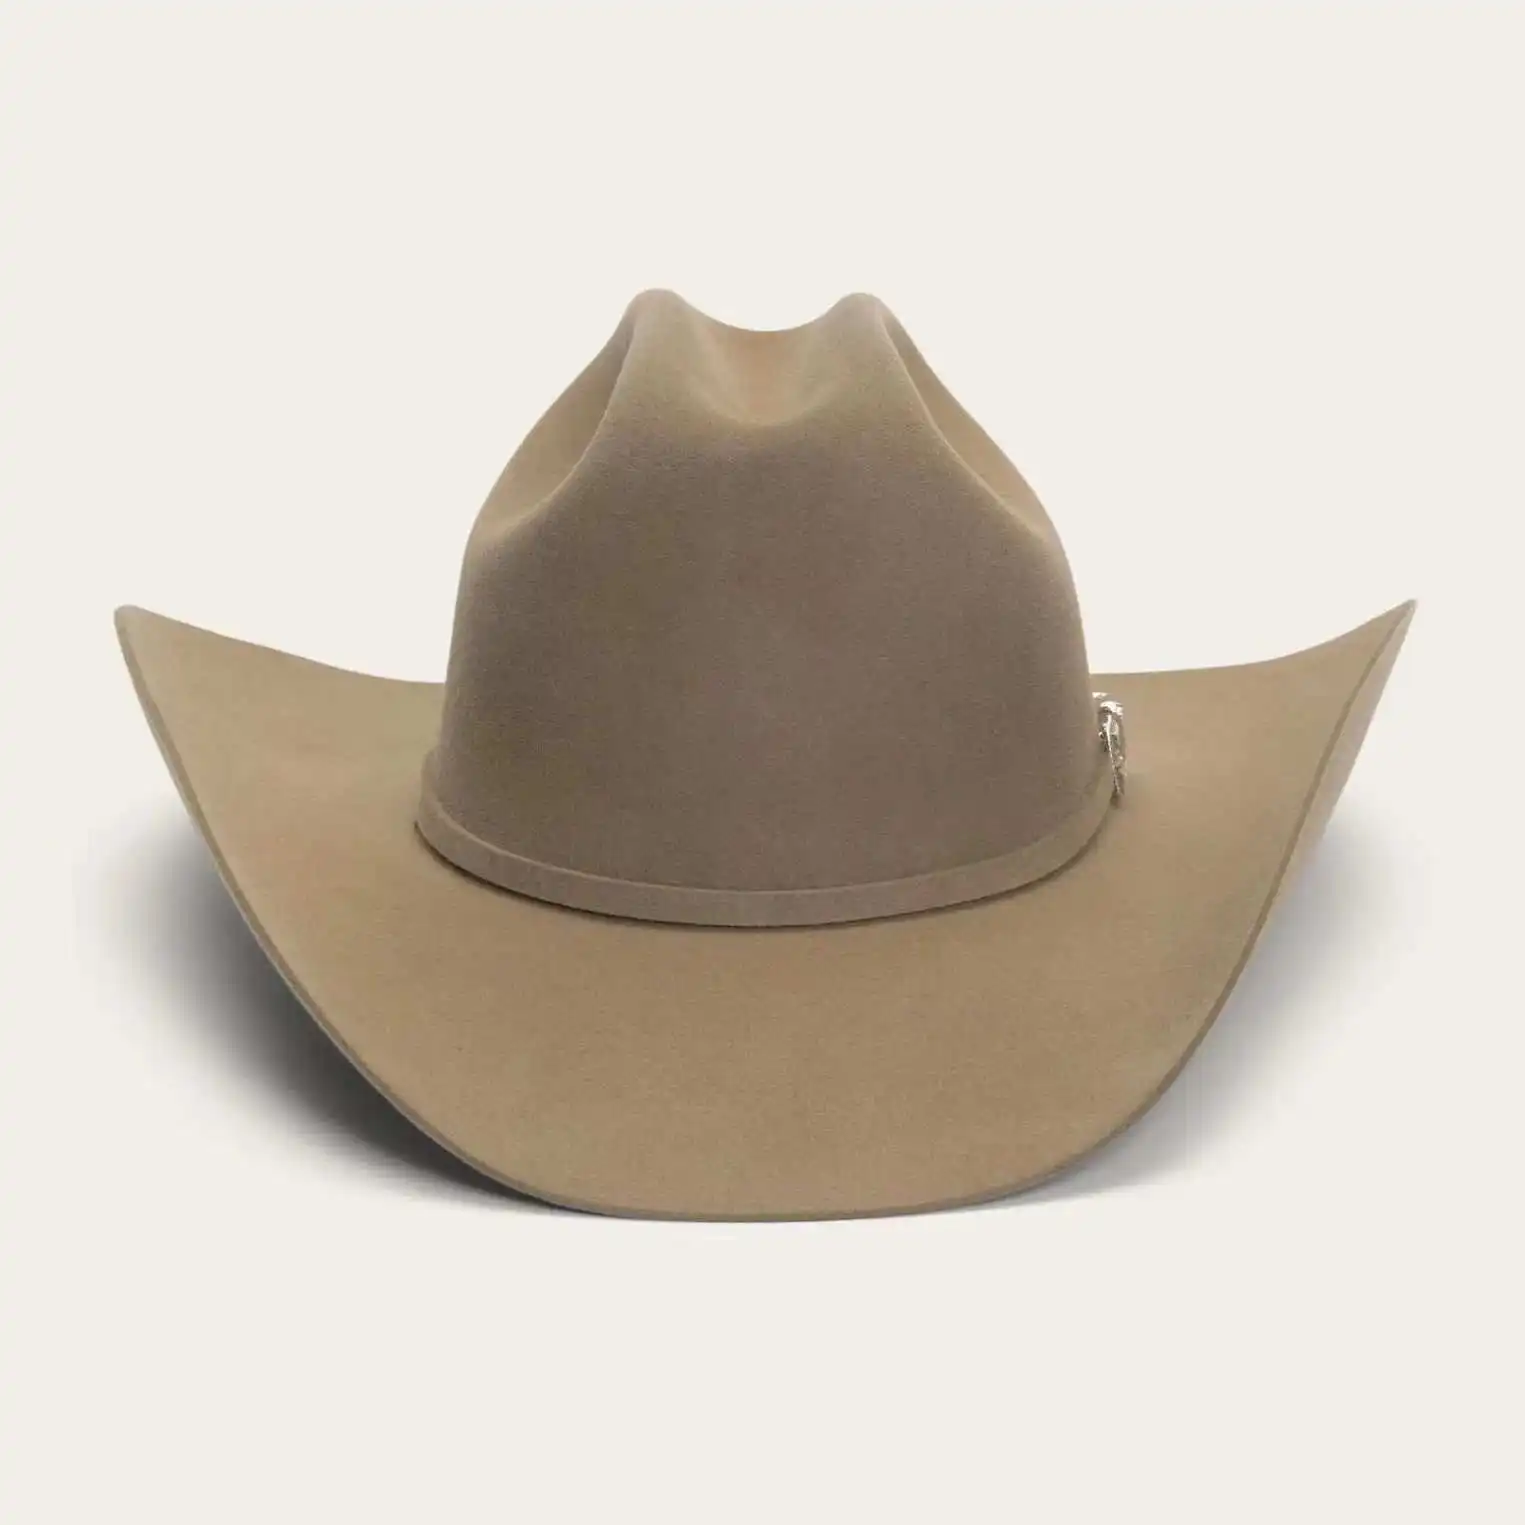 Sombrero De Vaquero 100% Wool Felt Stetson Cowboy Hats For Western ...